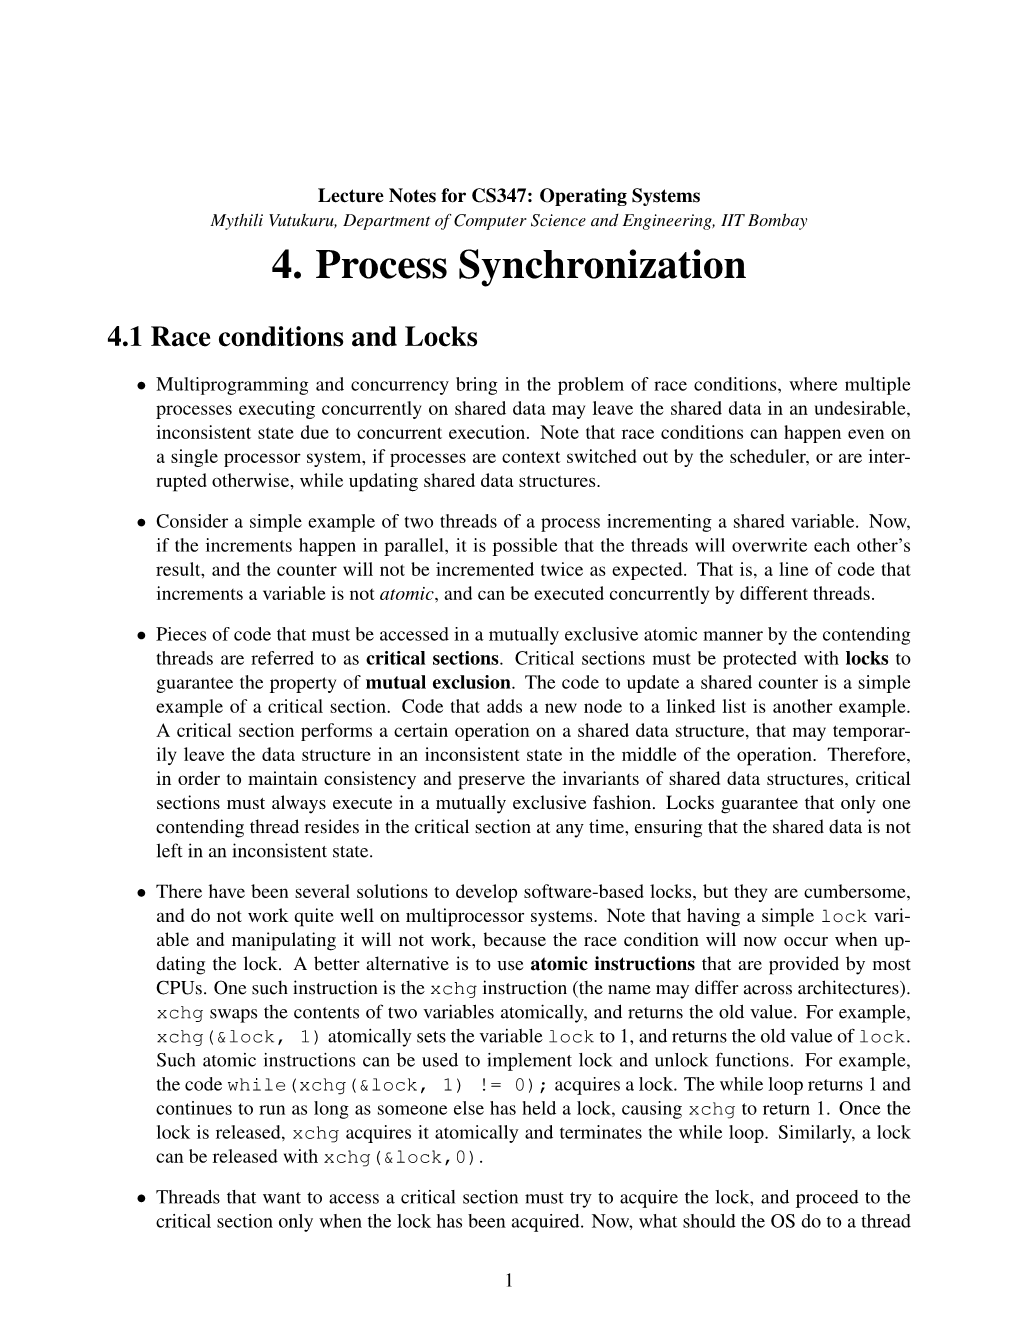 4. Process Synchronization